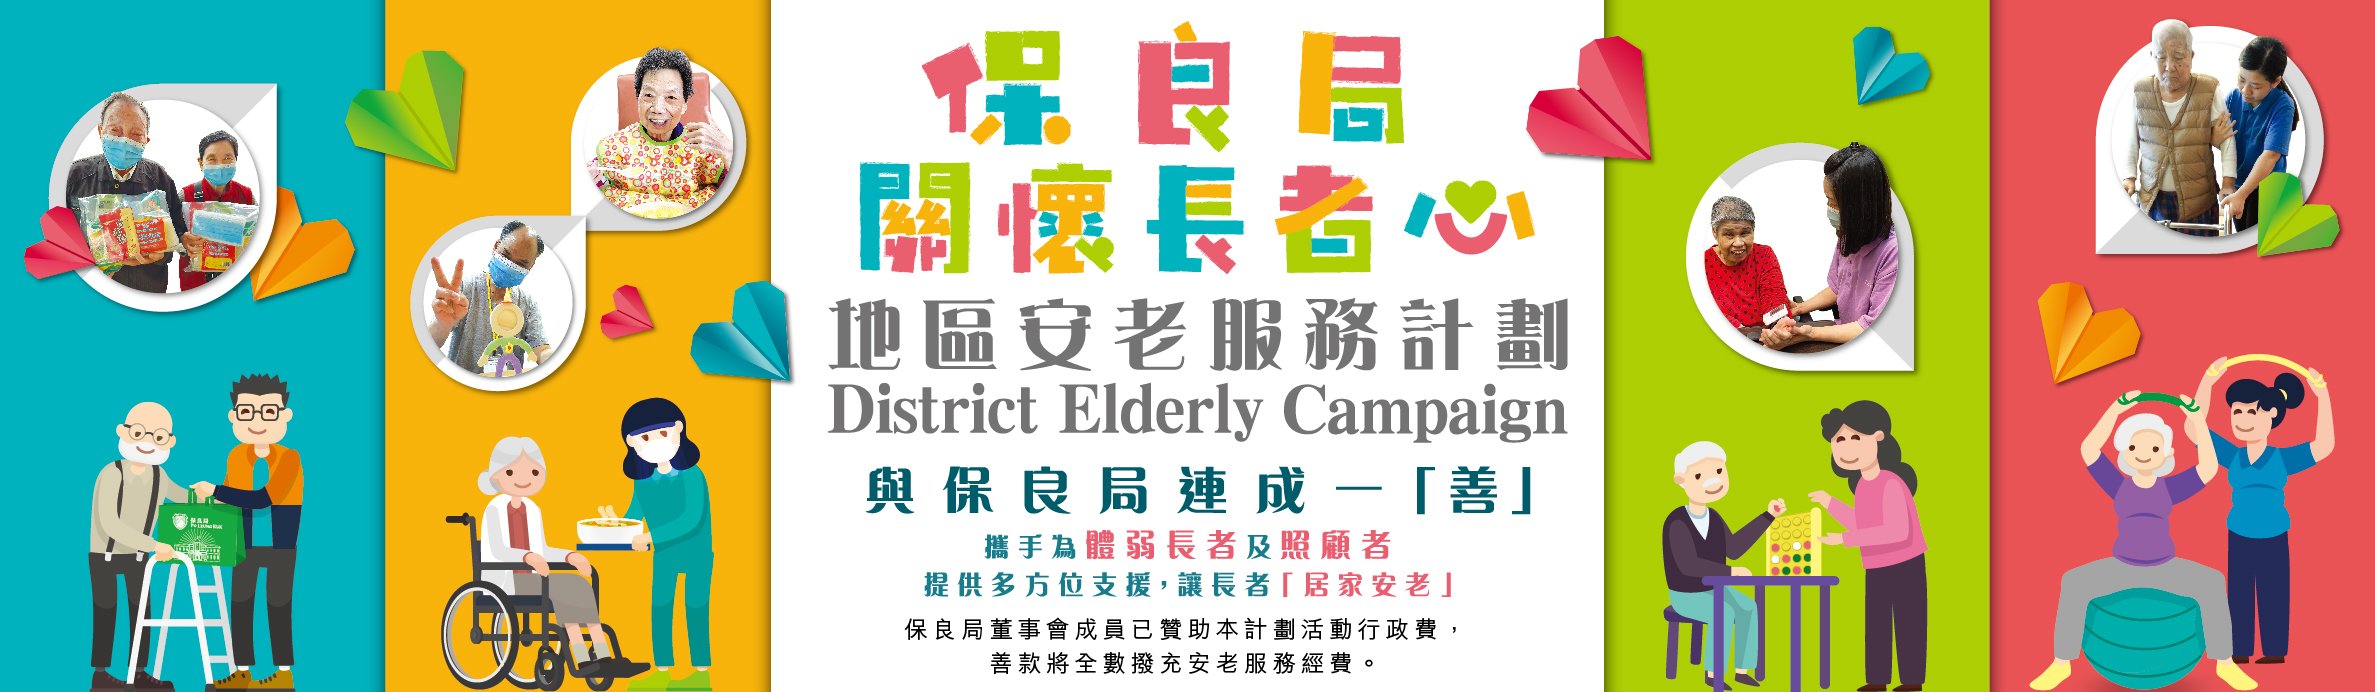 District Elderly Campaign Web Banner